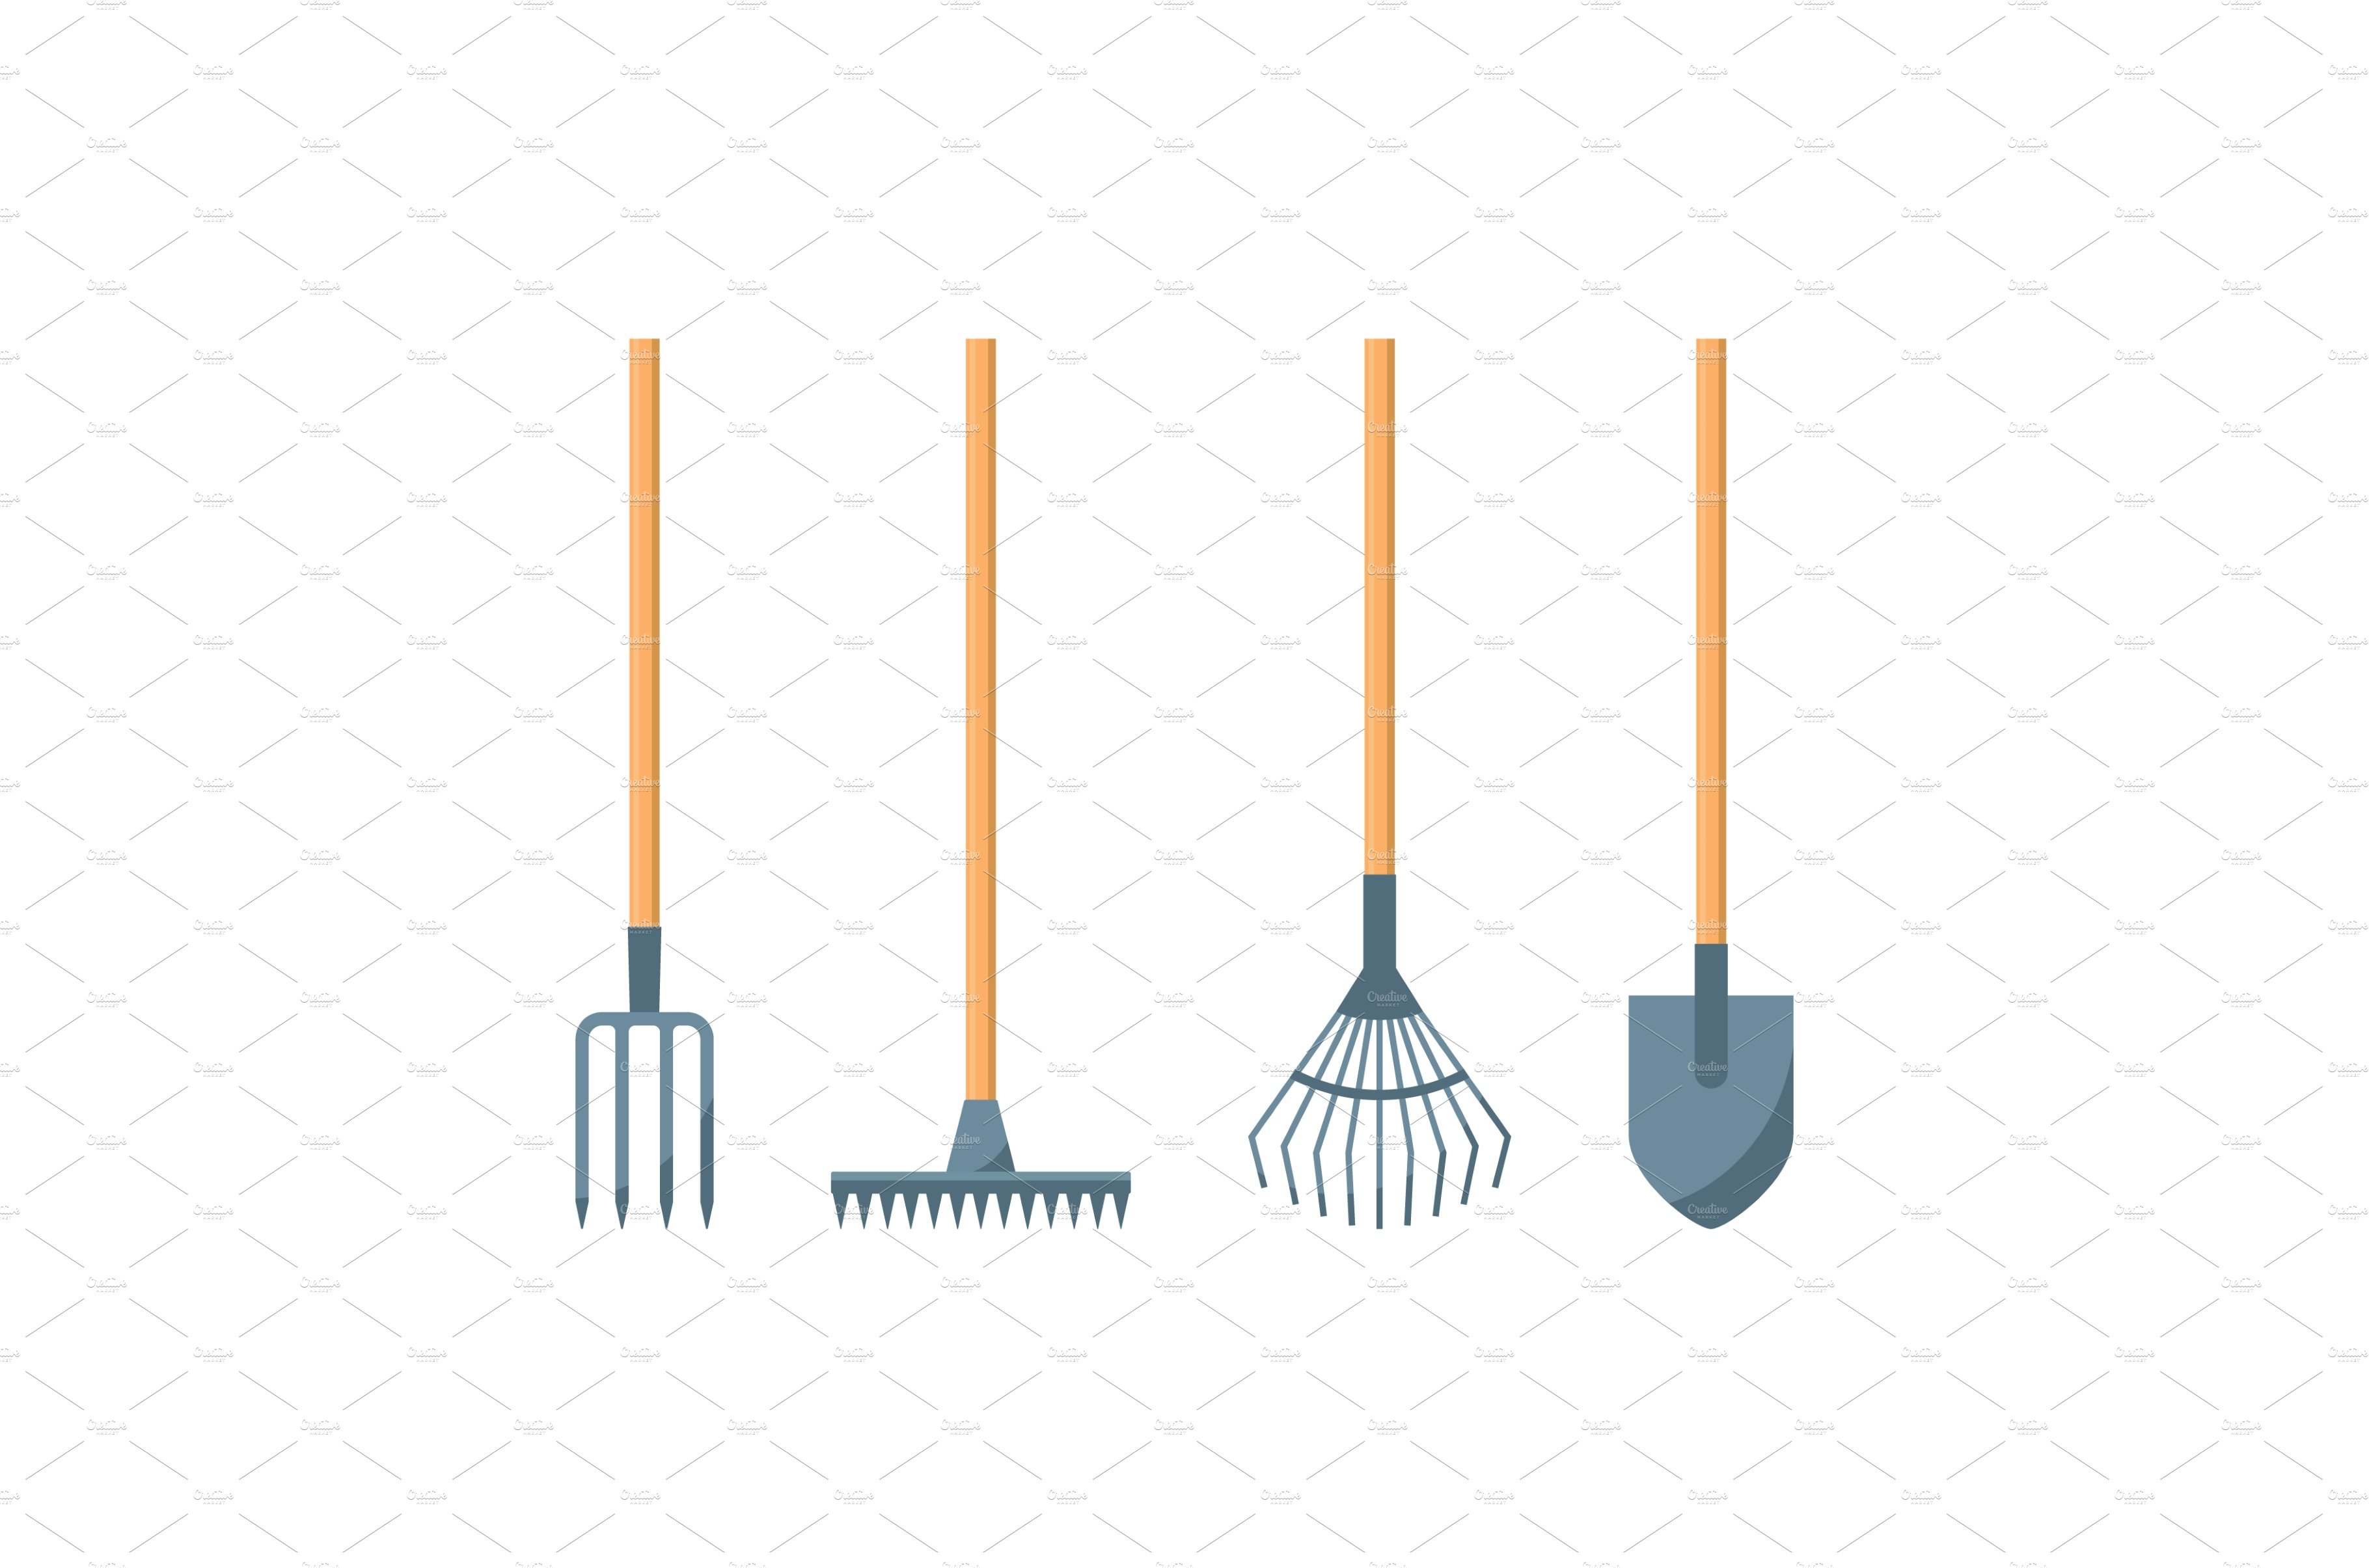 Shovel or spade, rake and pitchfork cover image.